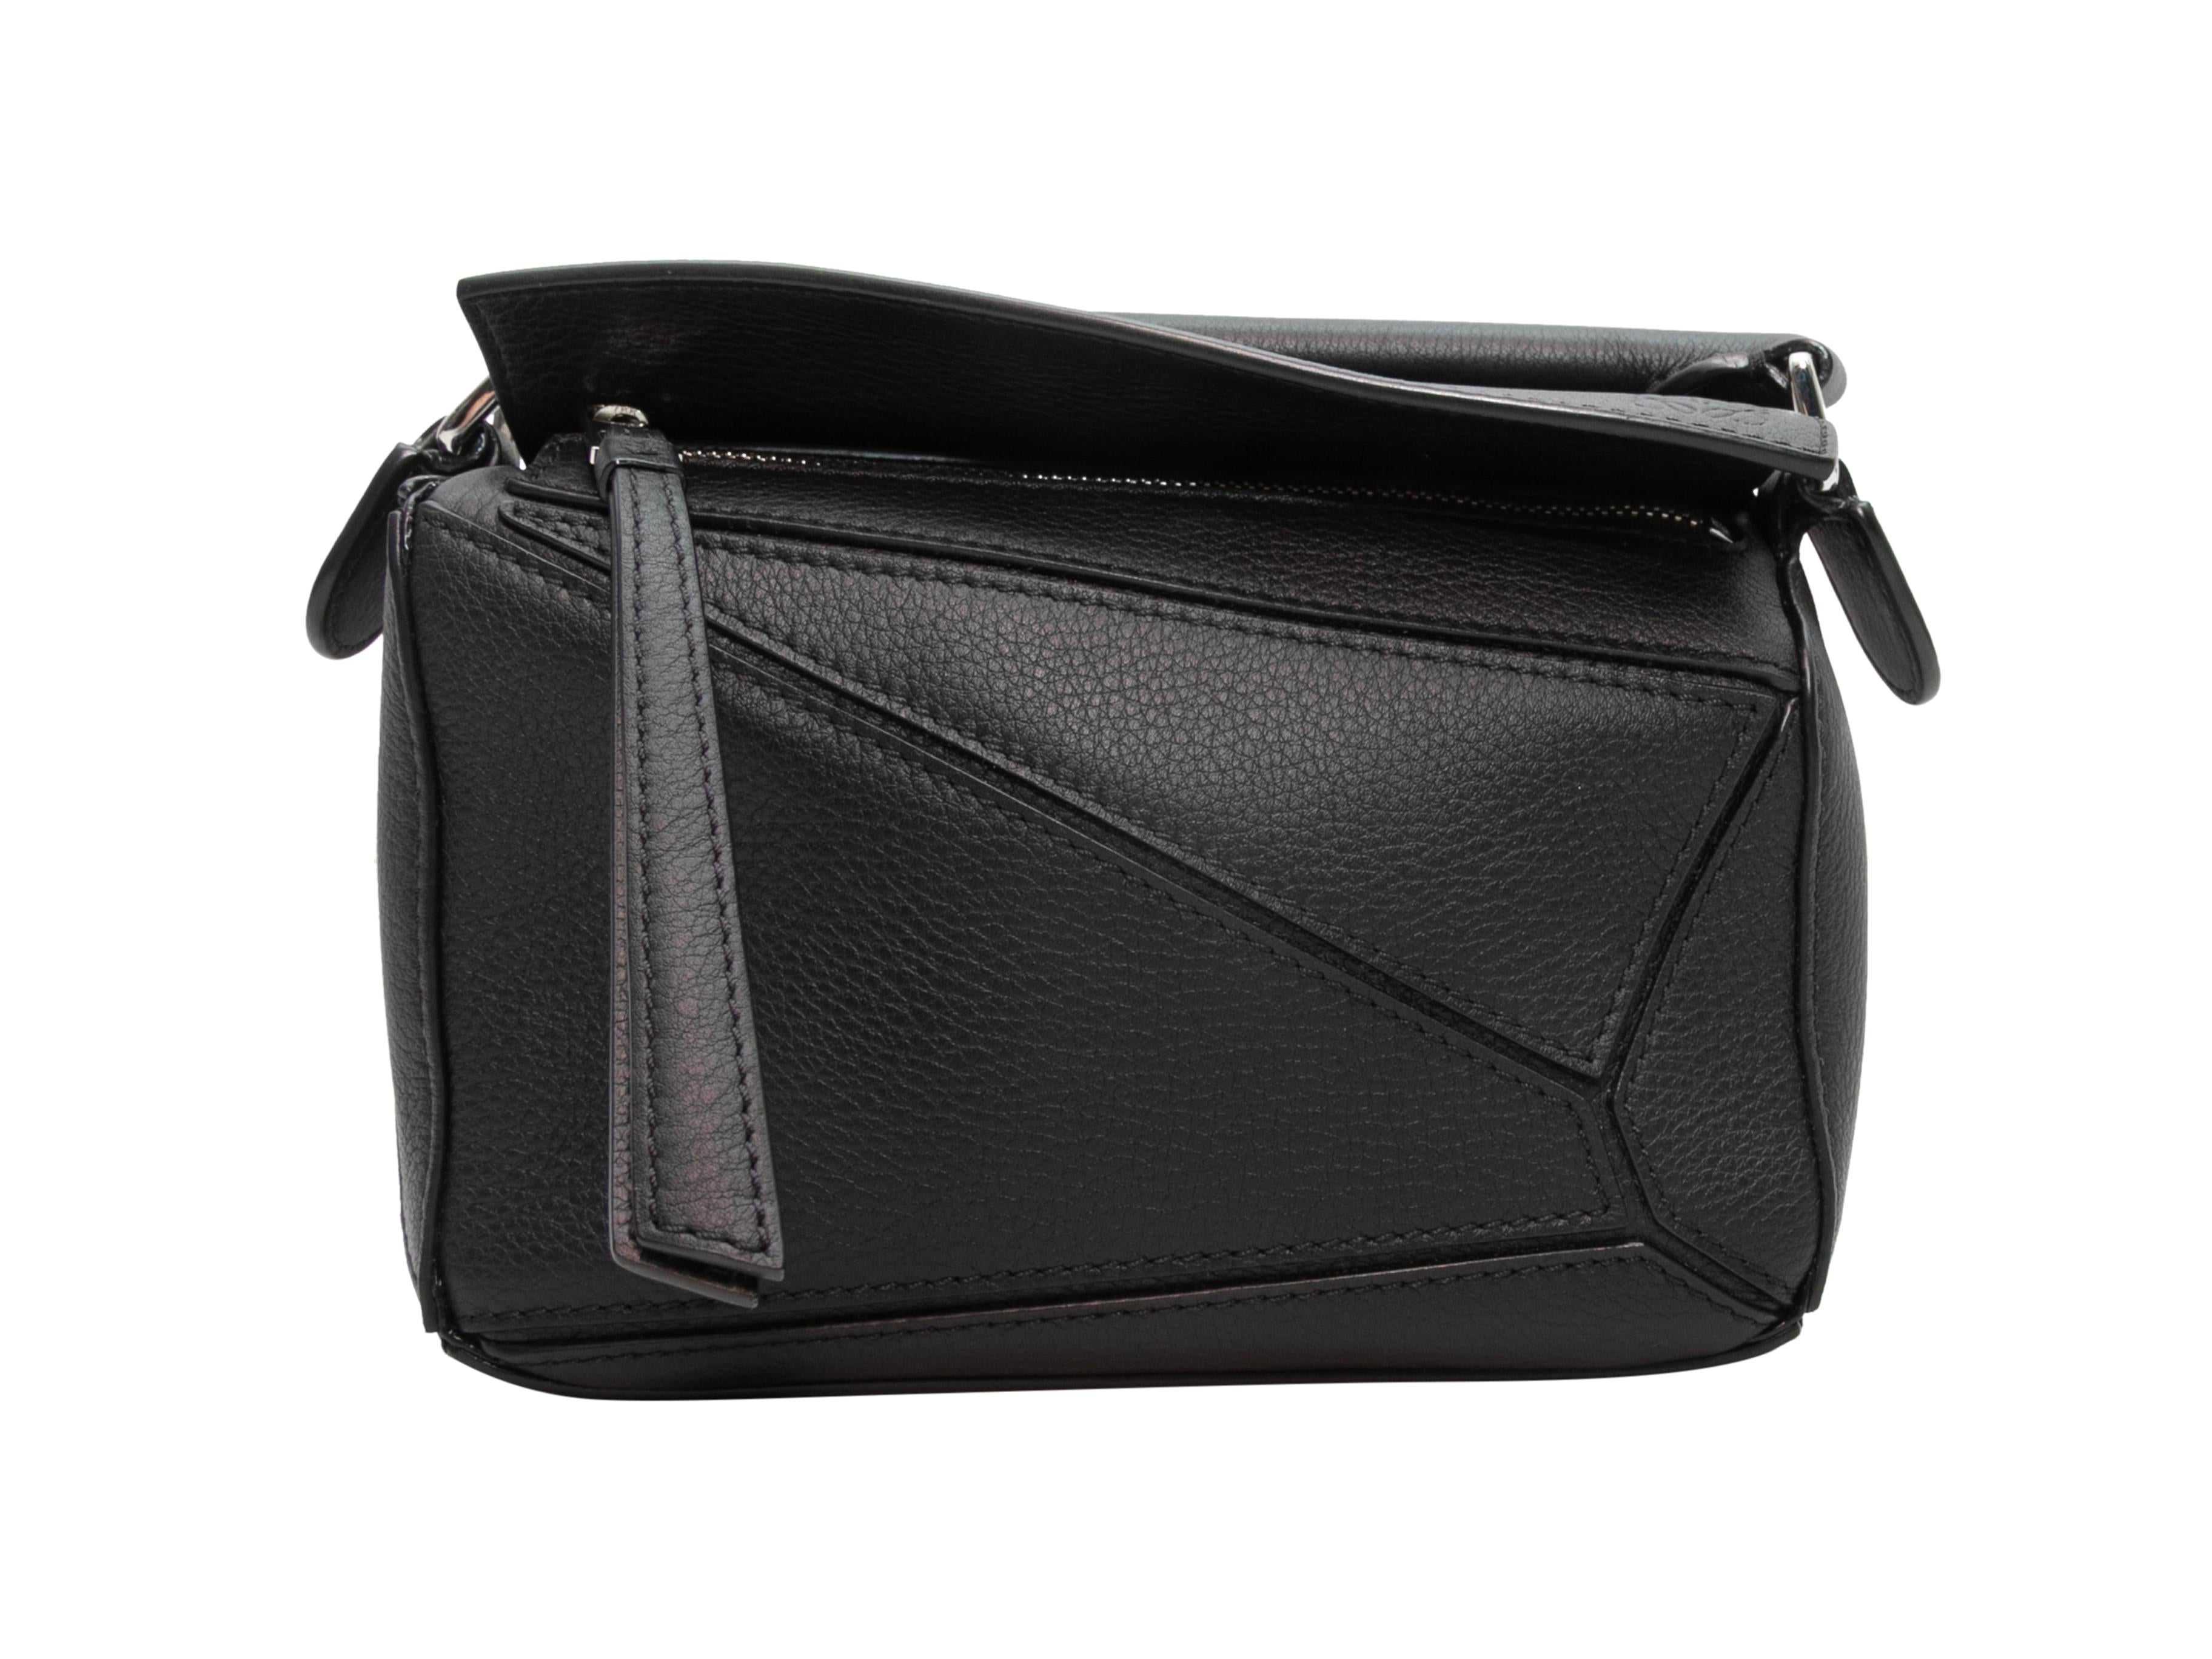 Black Loewe Mini Leather Puzzle Crossbody Bag. The Mini Puzzle Crossbody Bag features a leather body, silver-tone hardware, a single flat top handle, a single flat crossbody strap, and a top zip closure. 7